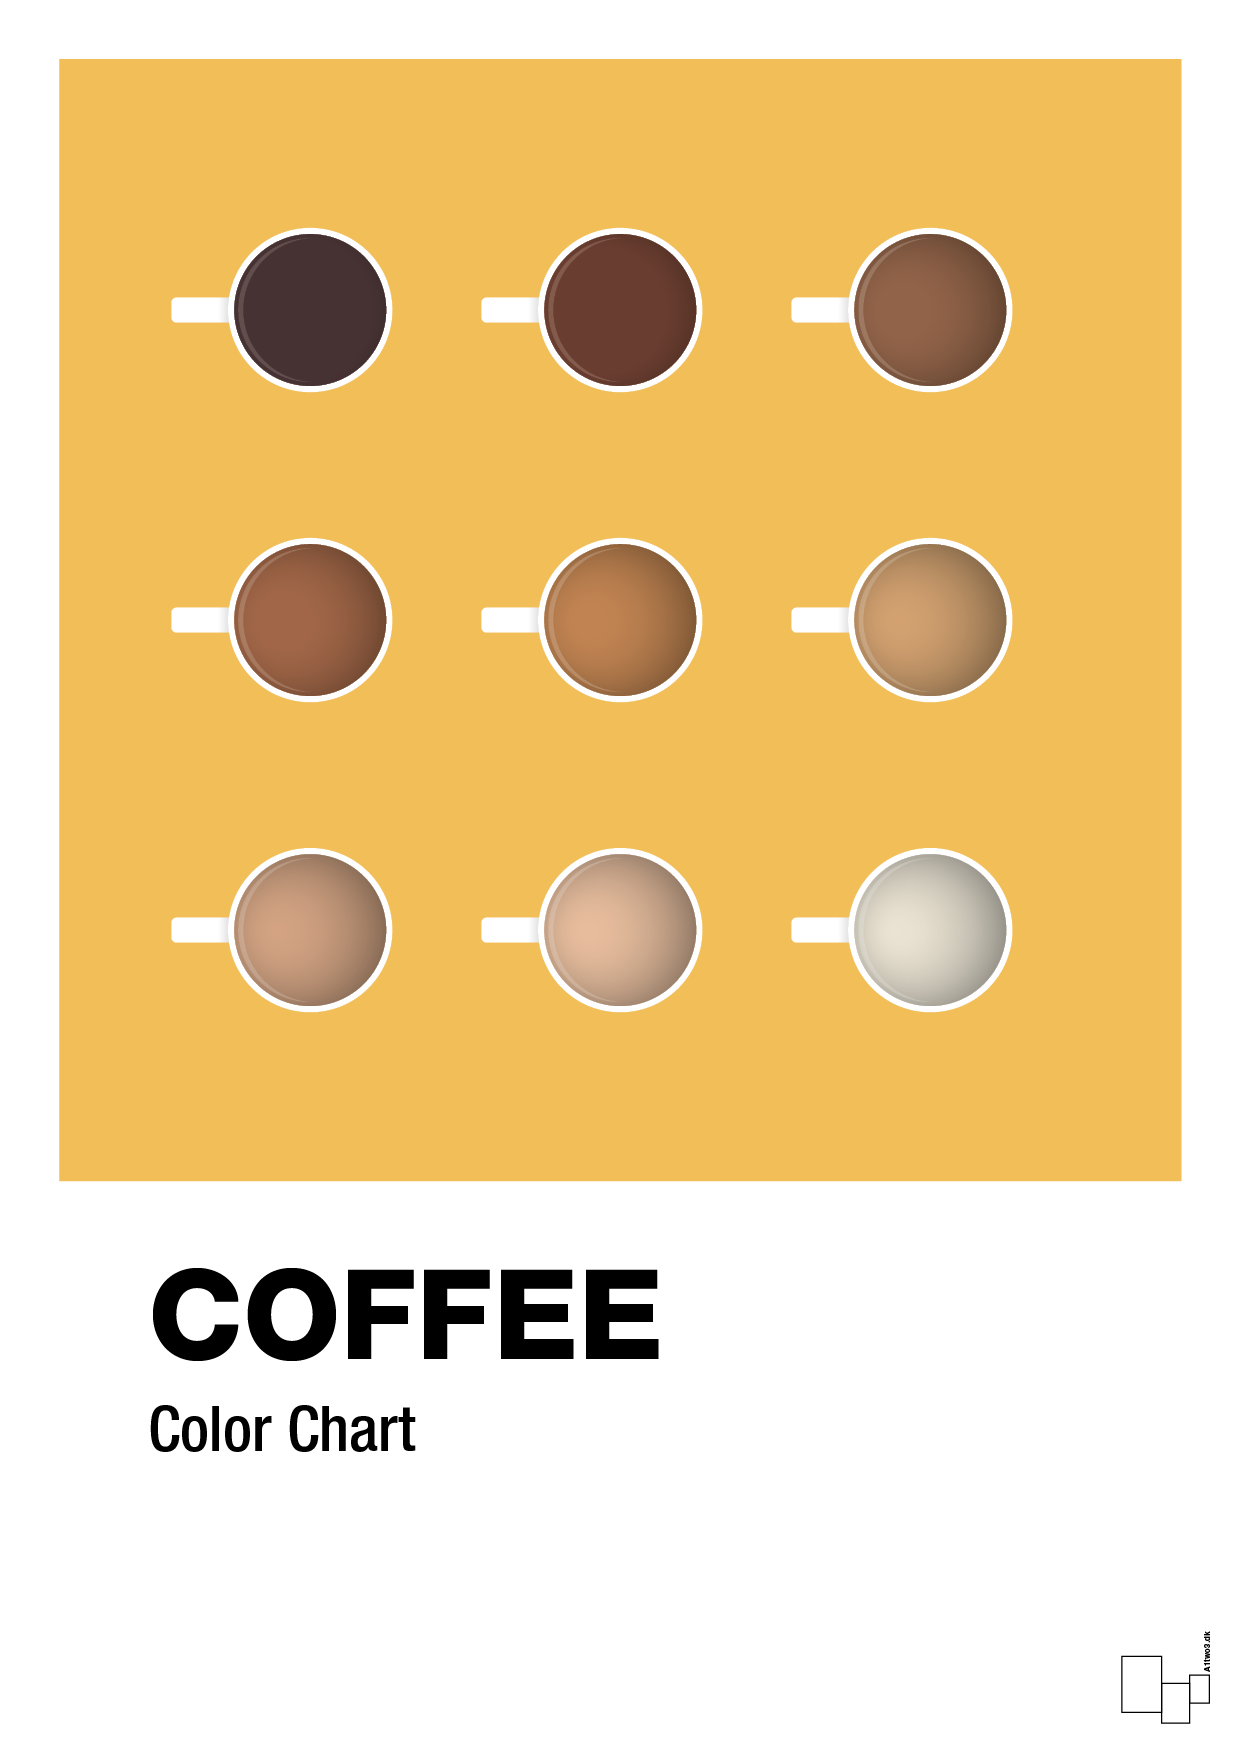 coffee color chart - Plakat med Mad & Drikke i Honeycomb